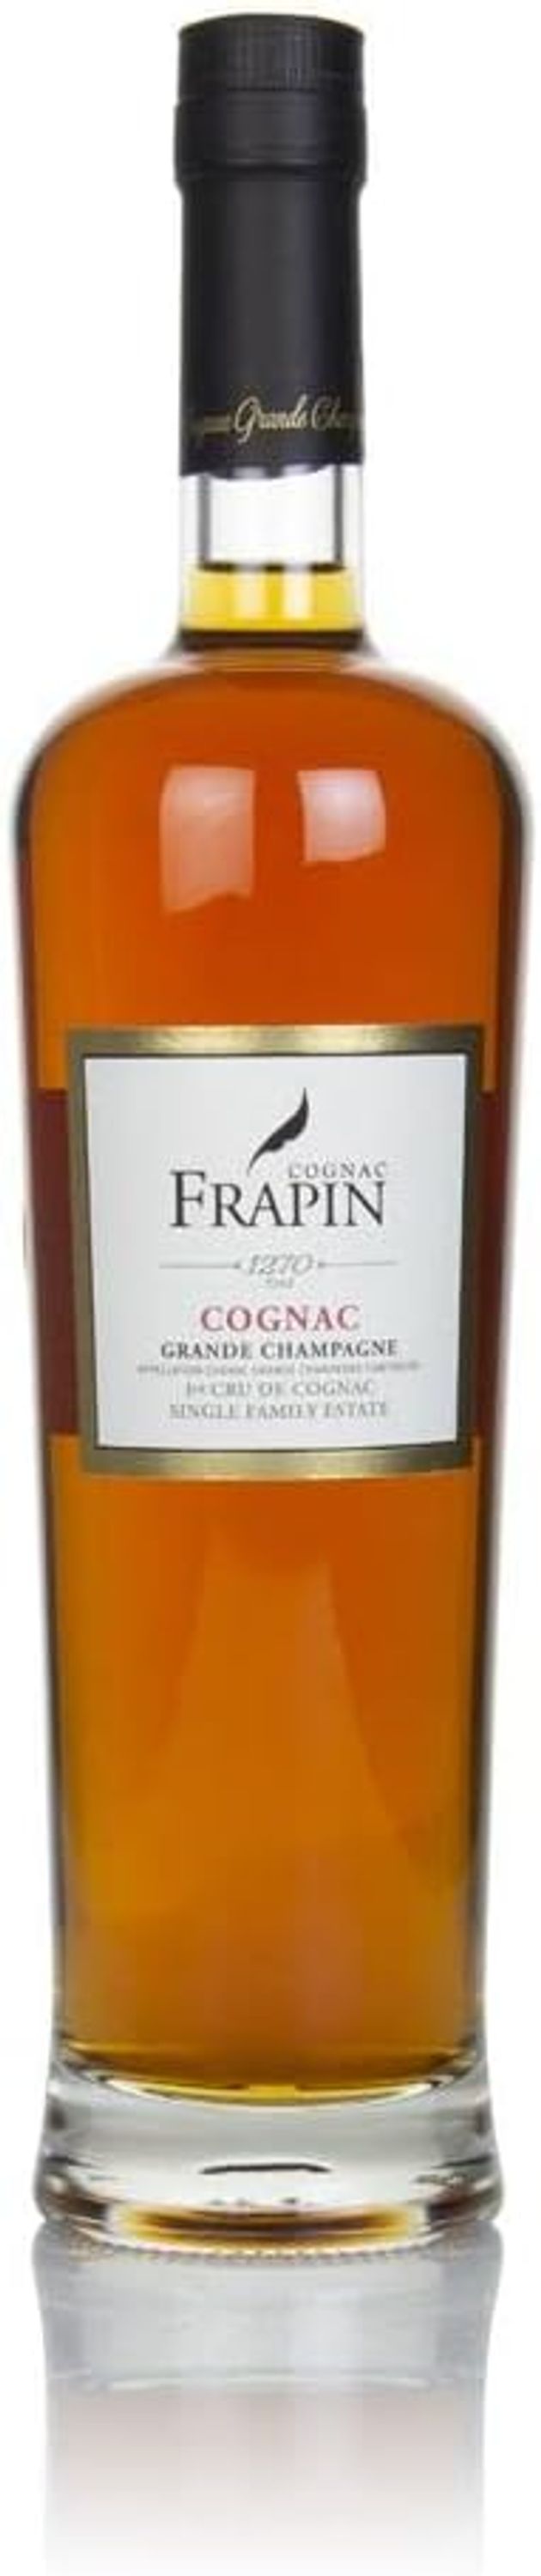 Frapin 1270 Grande Champagne 0.7l, alc. 40% by volume, Cognac France